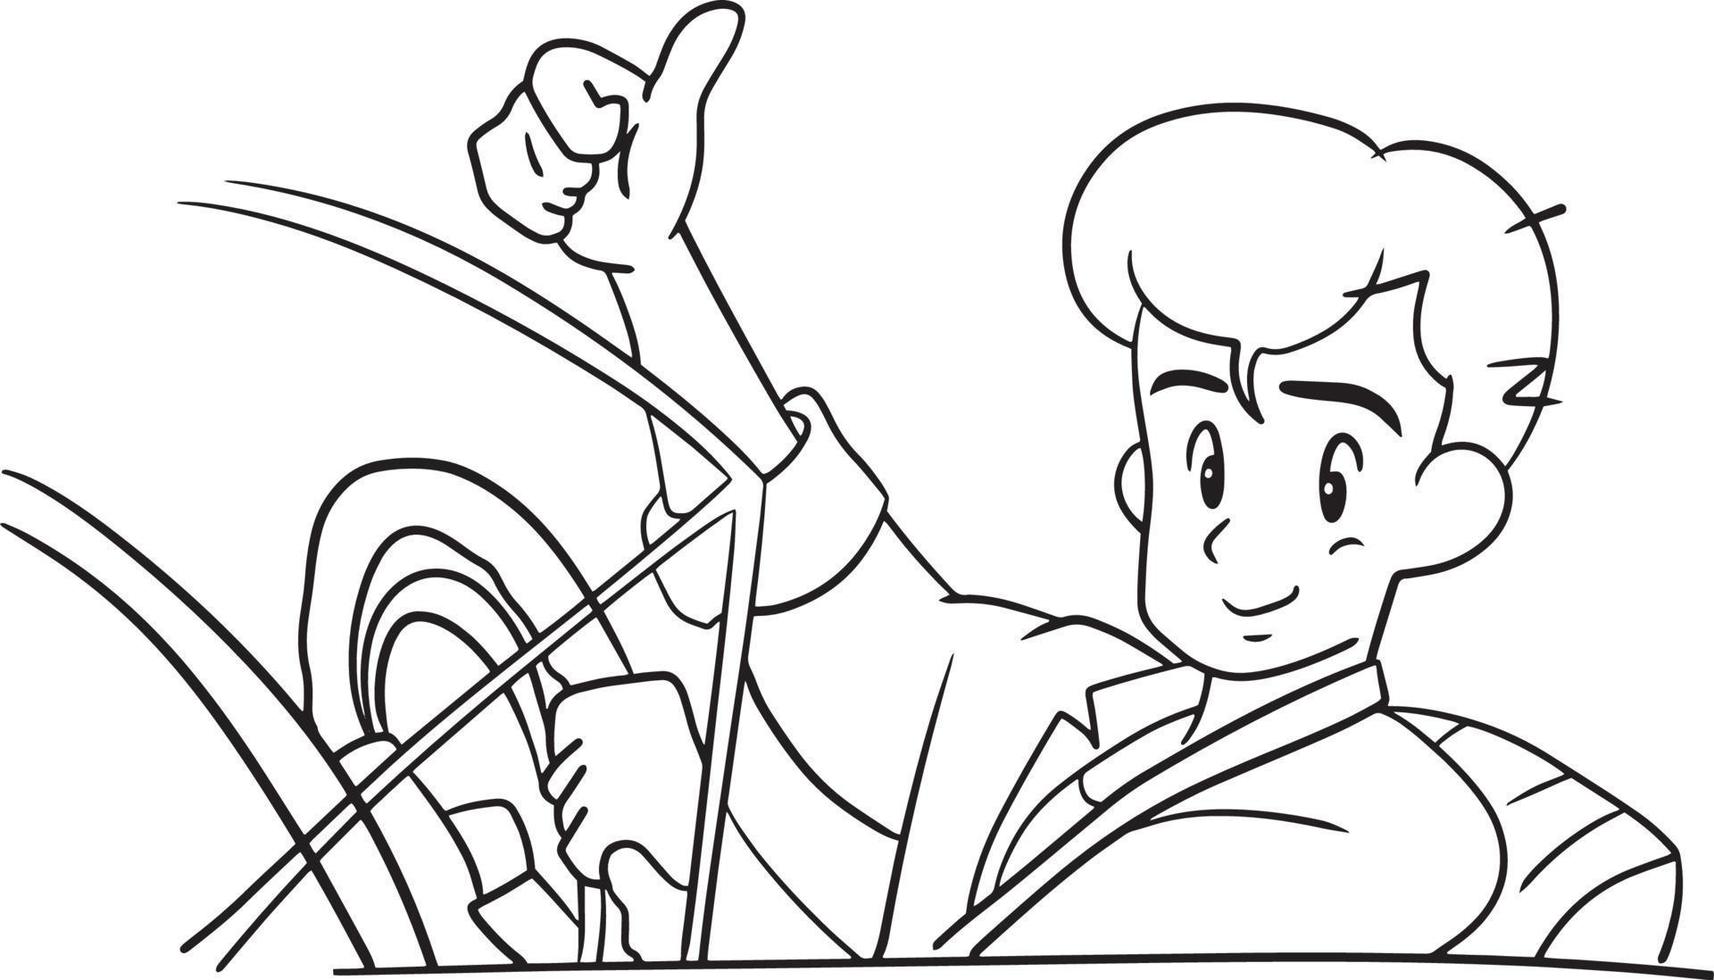 Man drive car cartoon doodle kawaii anime coloring page cute vector